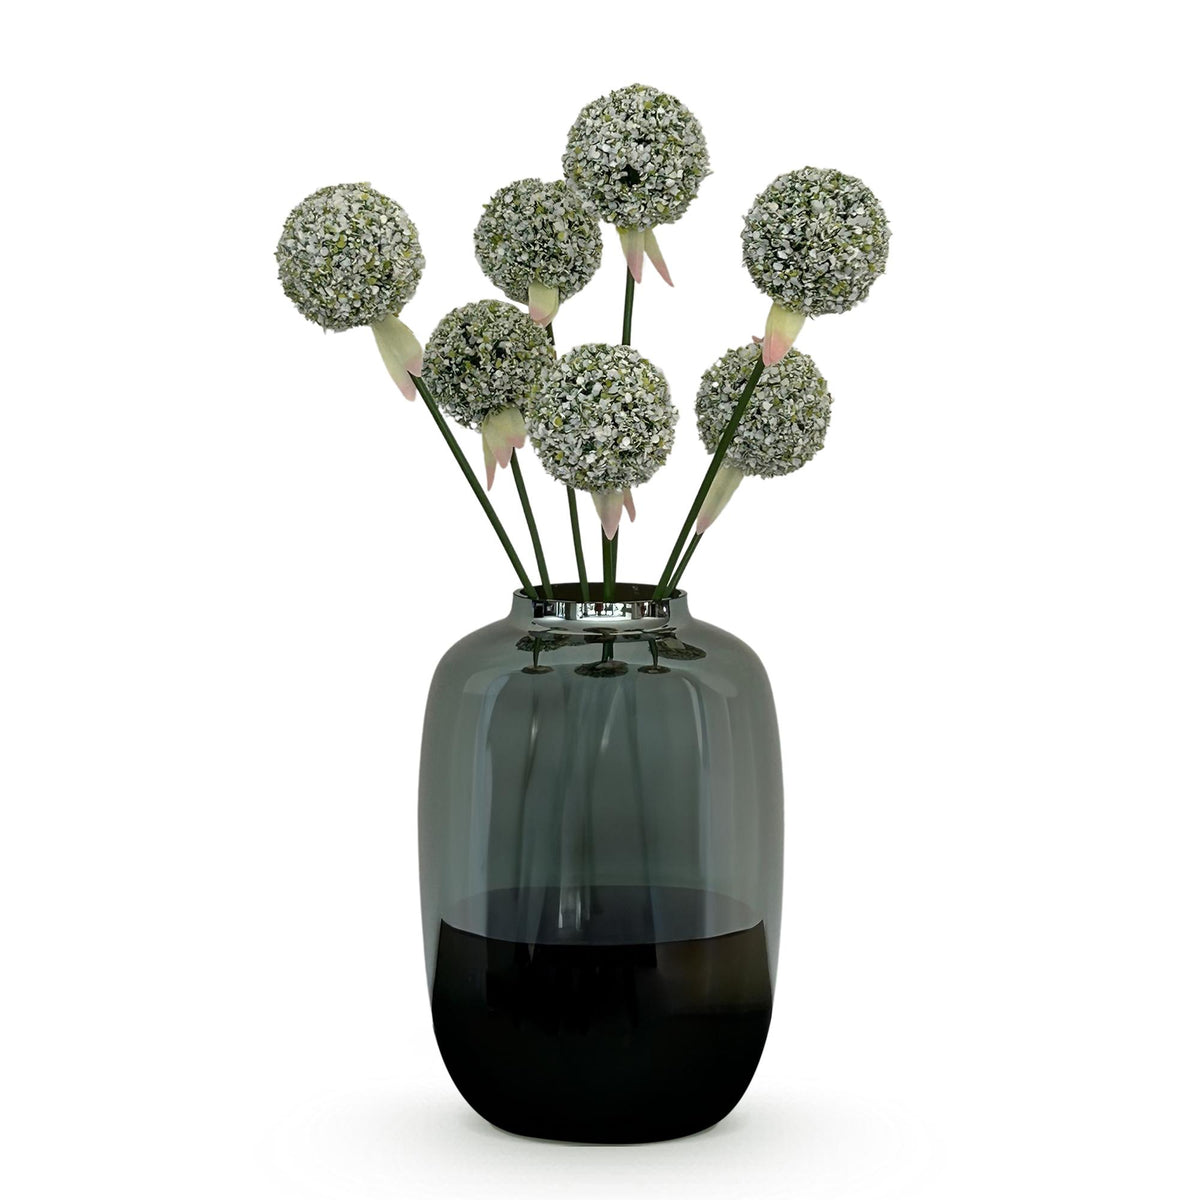 Kunstbloemen Solo - x 7 - 70 cm - Allium Flower - White